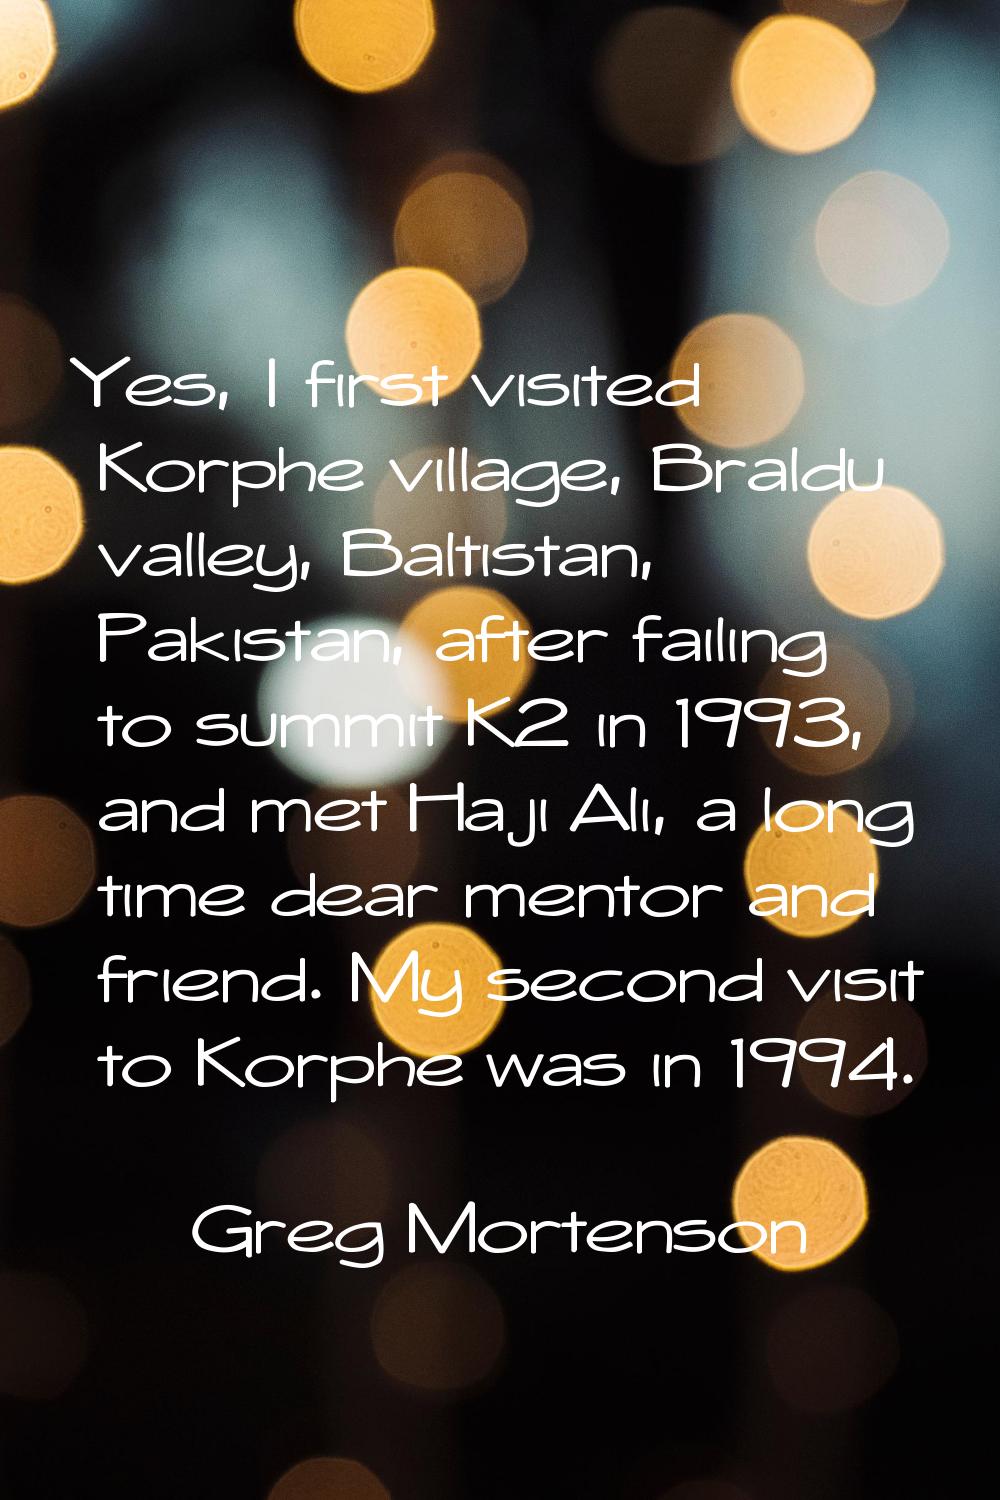 Yes, I first visited Korphe village, Braldu valley, Baltistan, Pakistan, after failing to summit K2